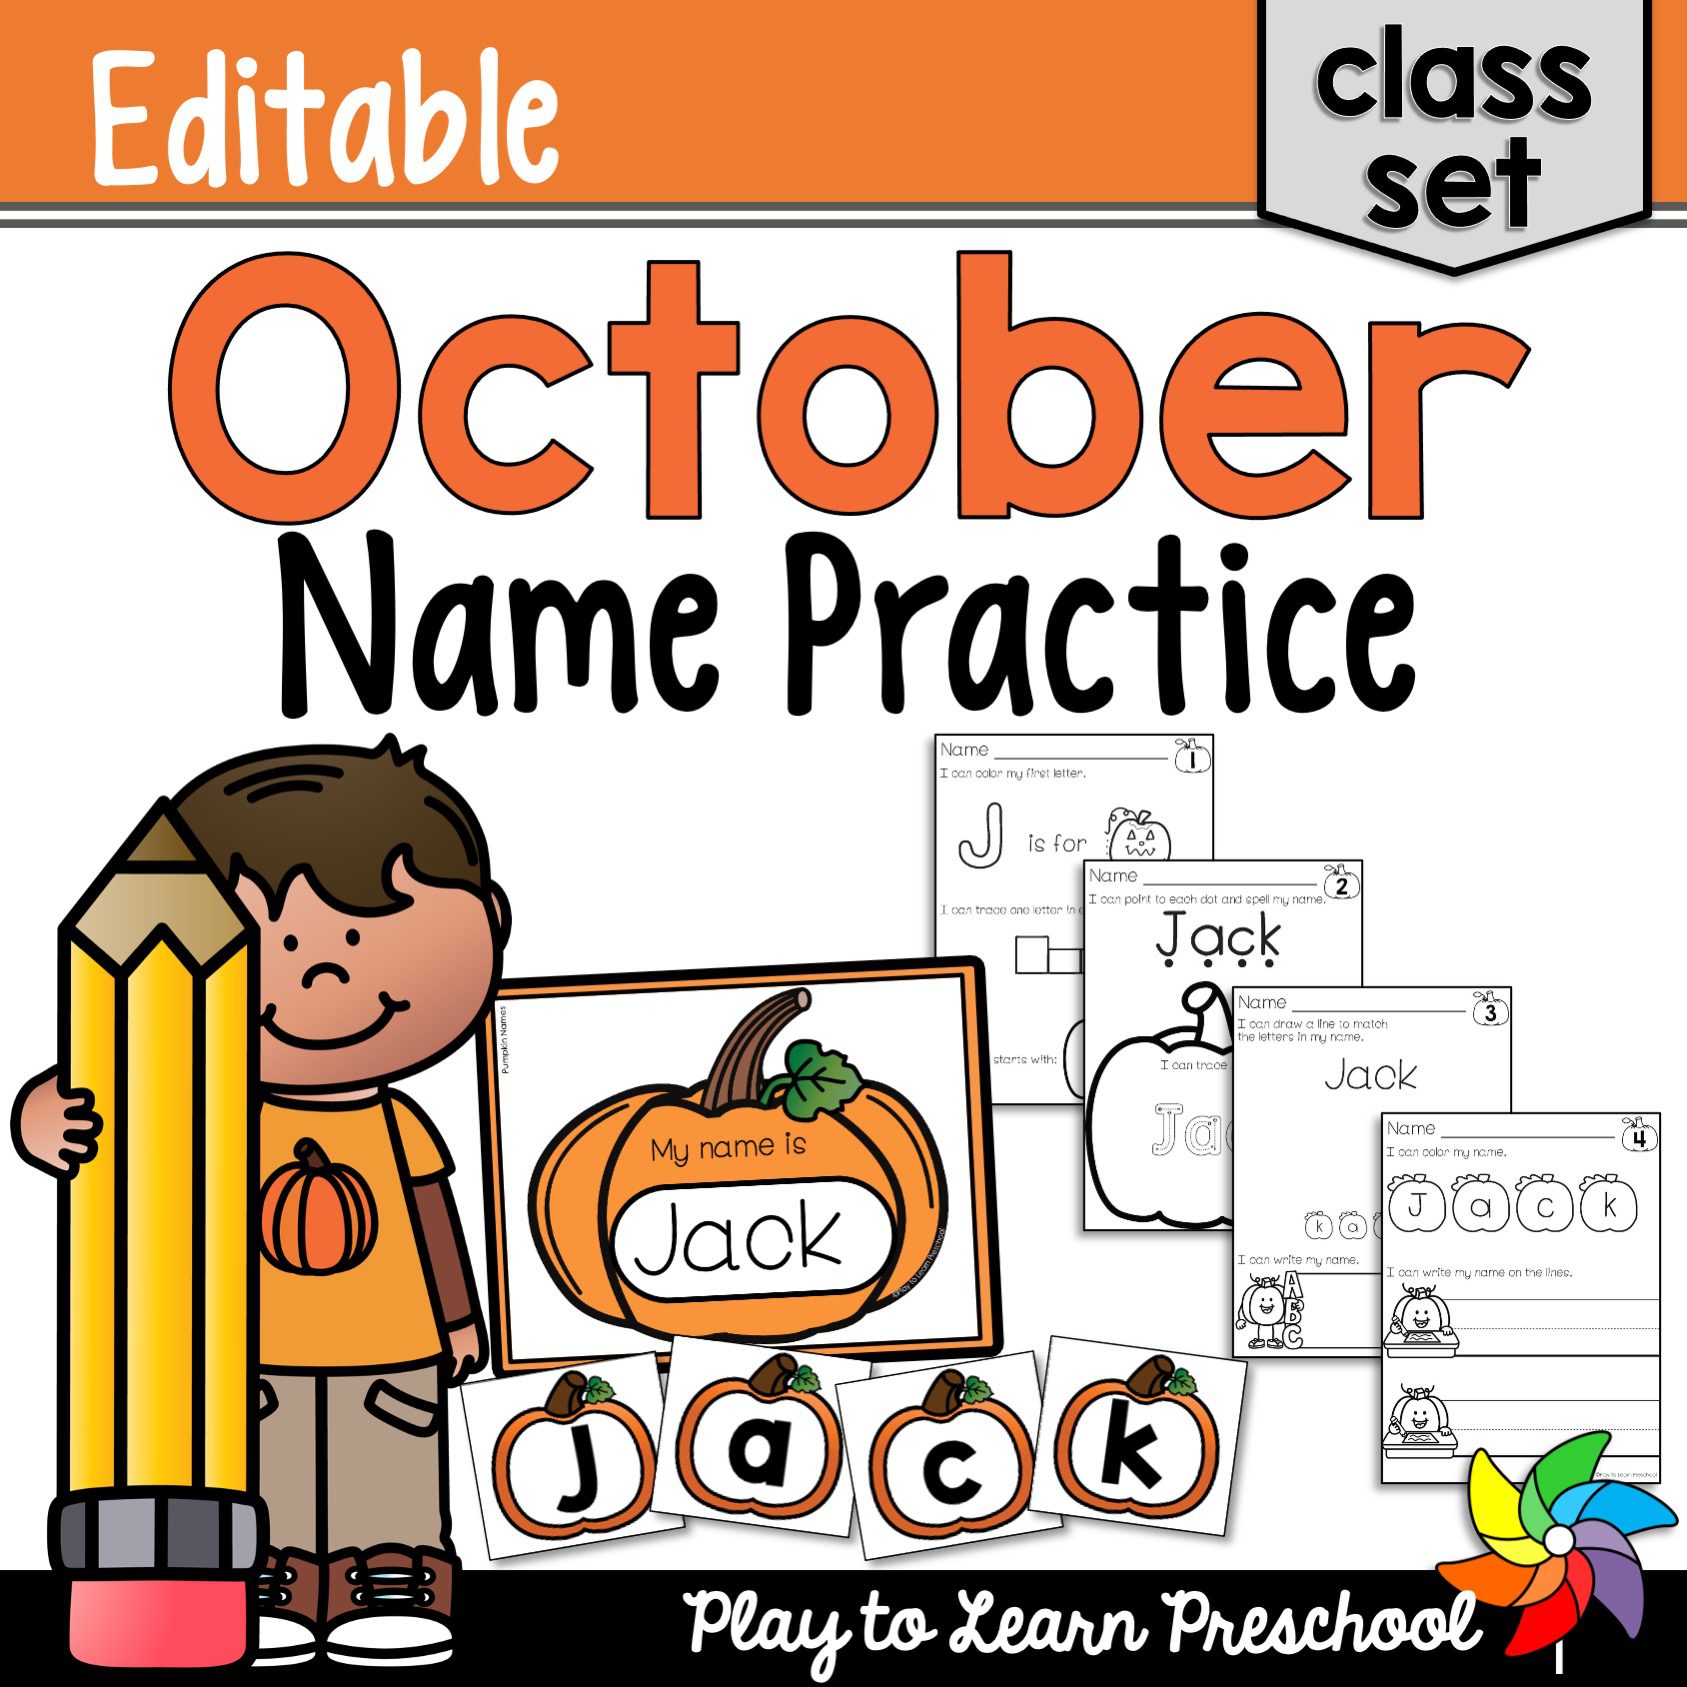 October Name Practice